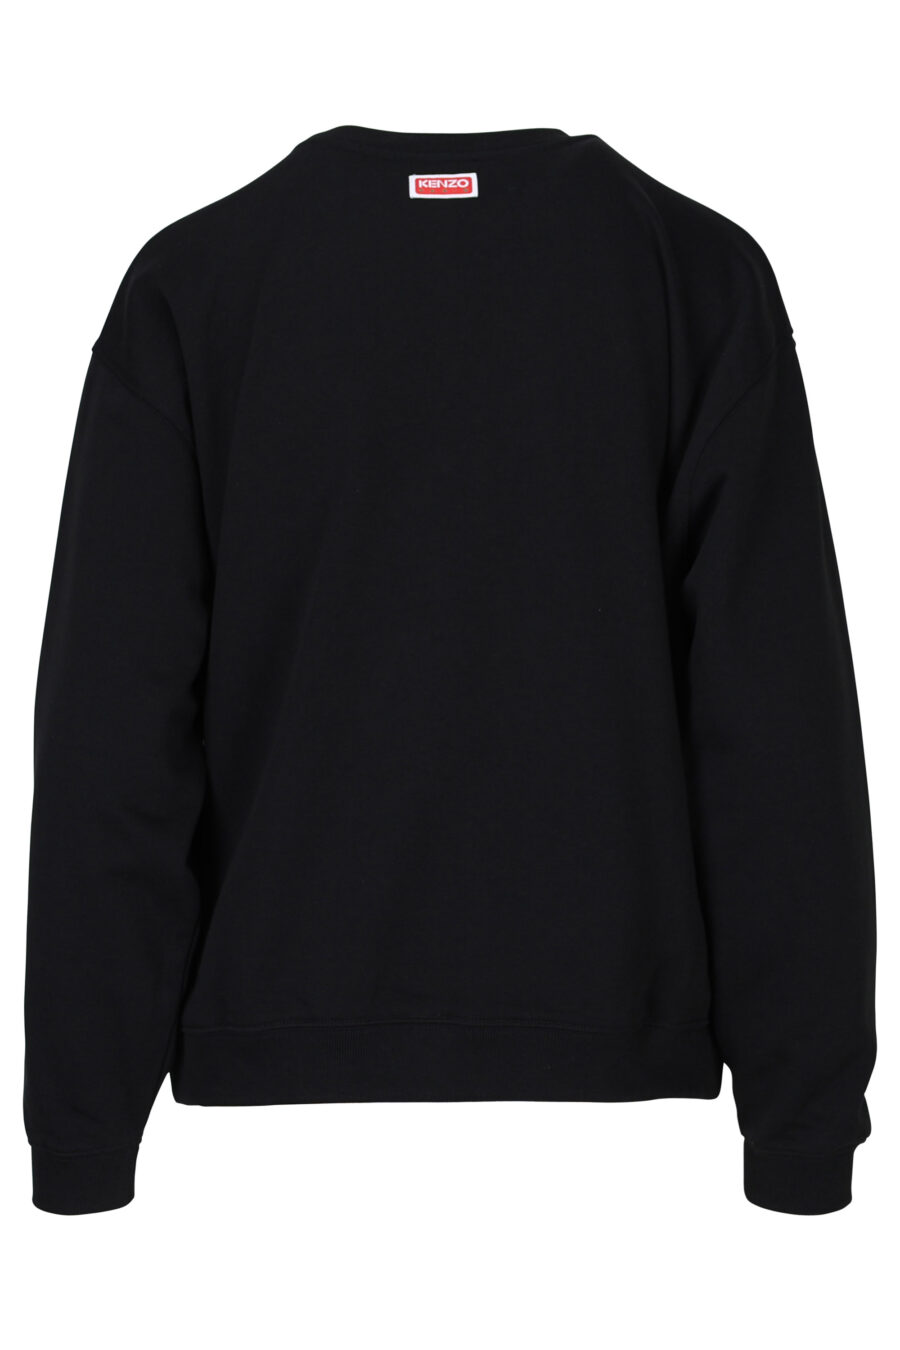 Black sweatshirt with embroidered "tiger" logo - 3612230551978 1